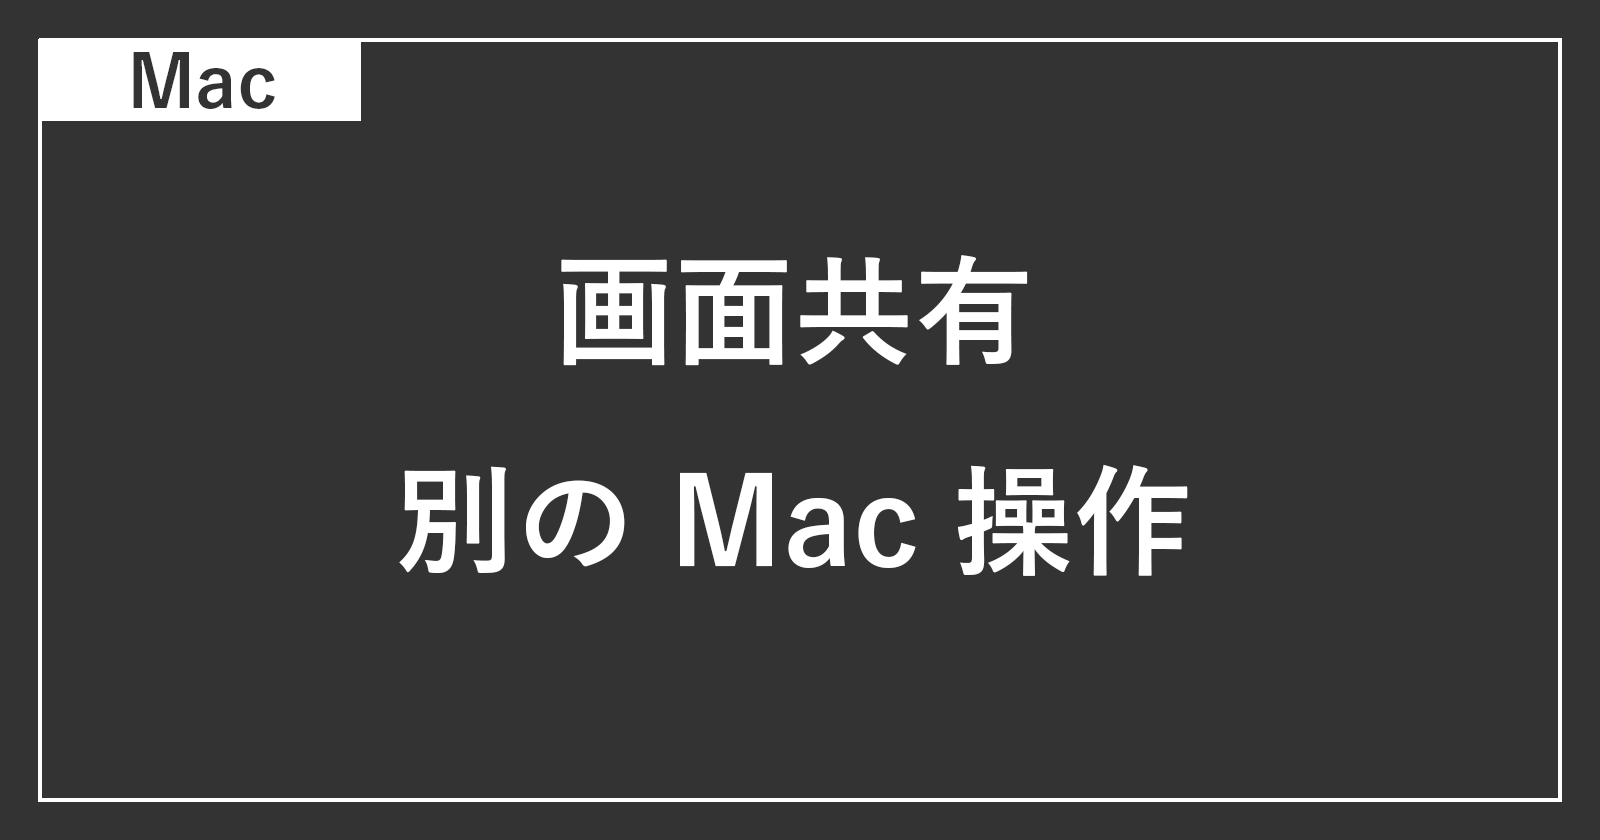 mac screen sharing